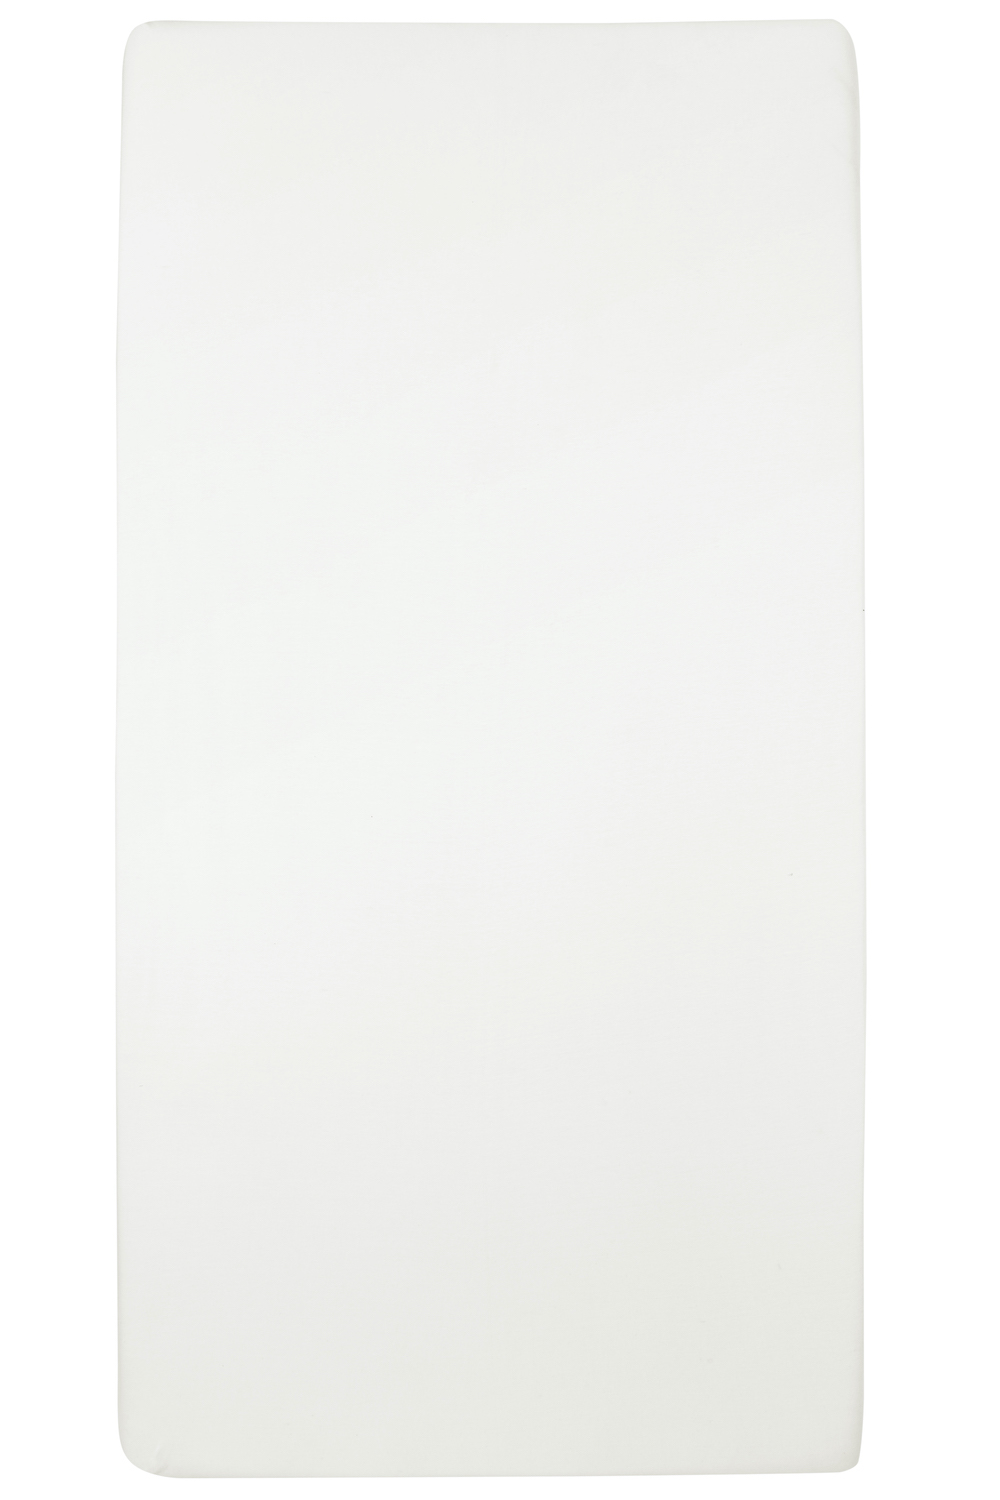 Hoeslaken tweepersoons Uni - warm white - 180x200cm